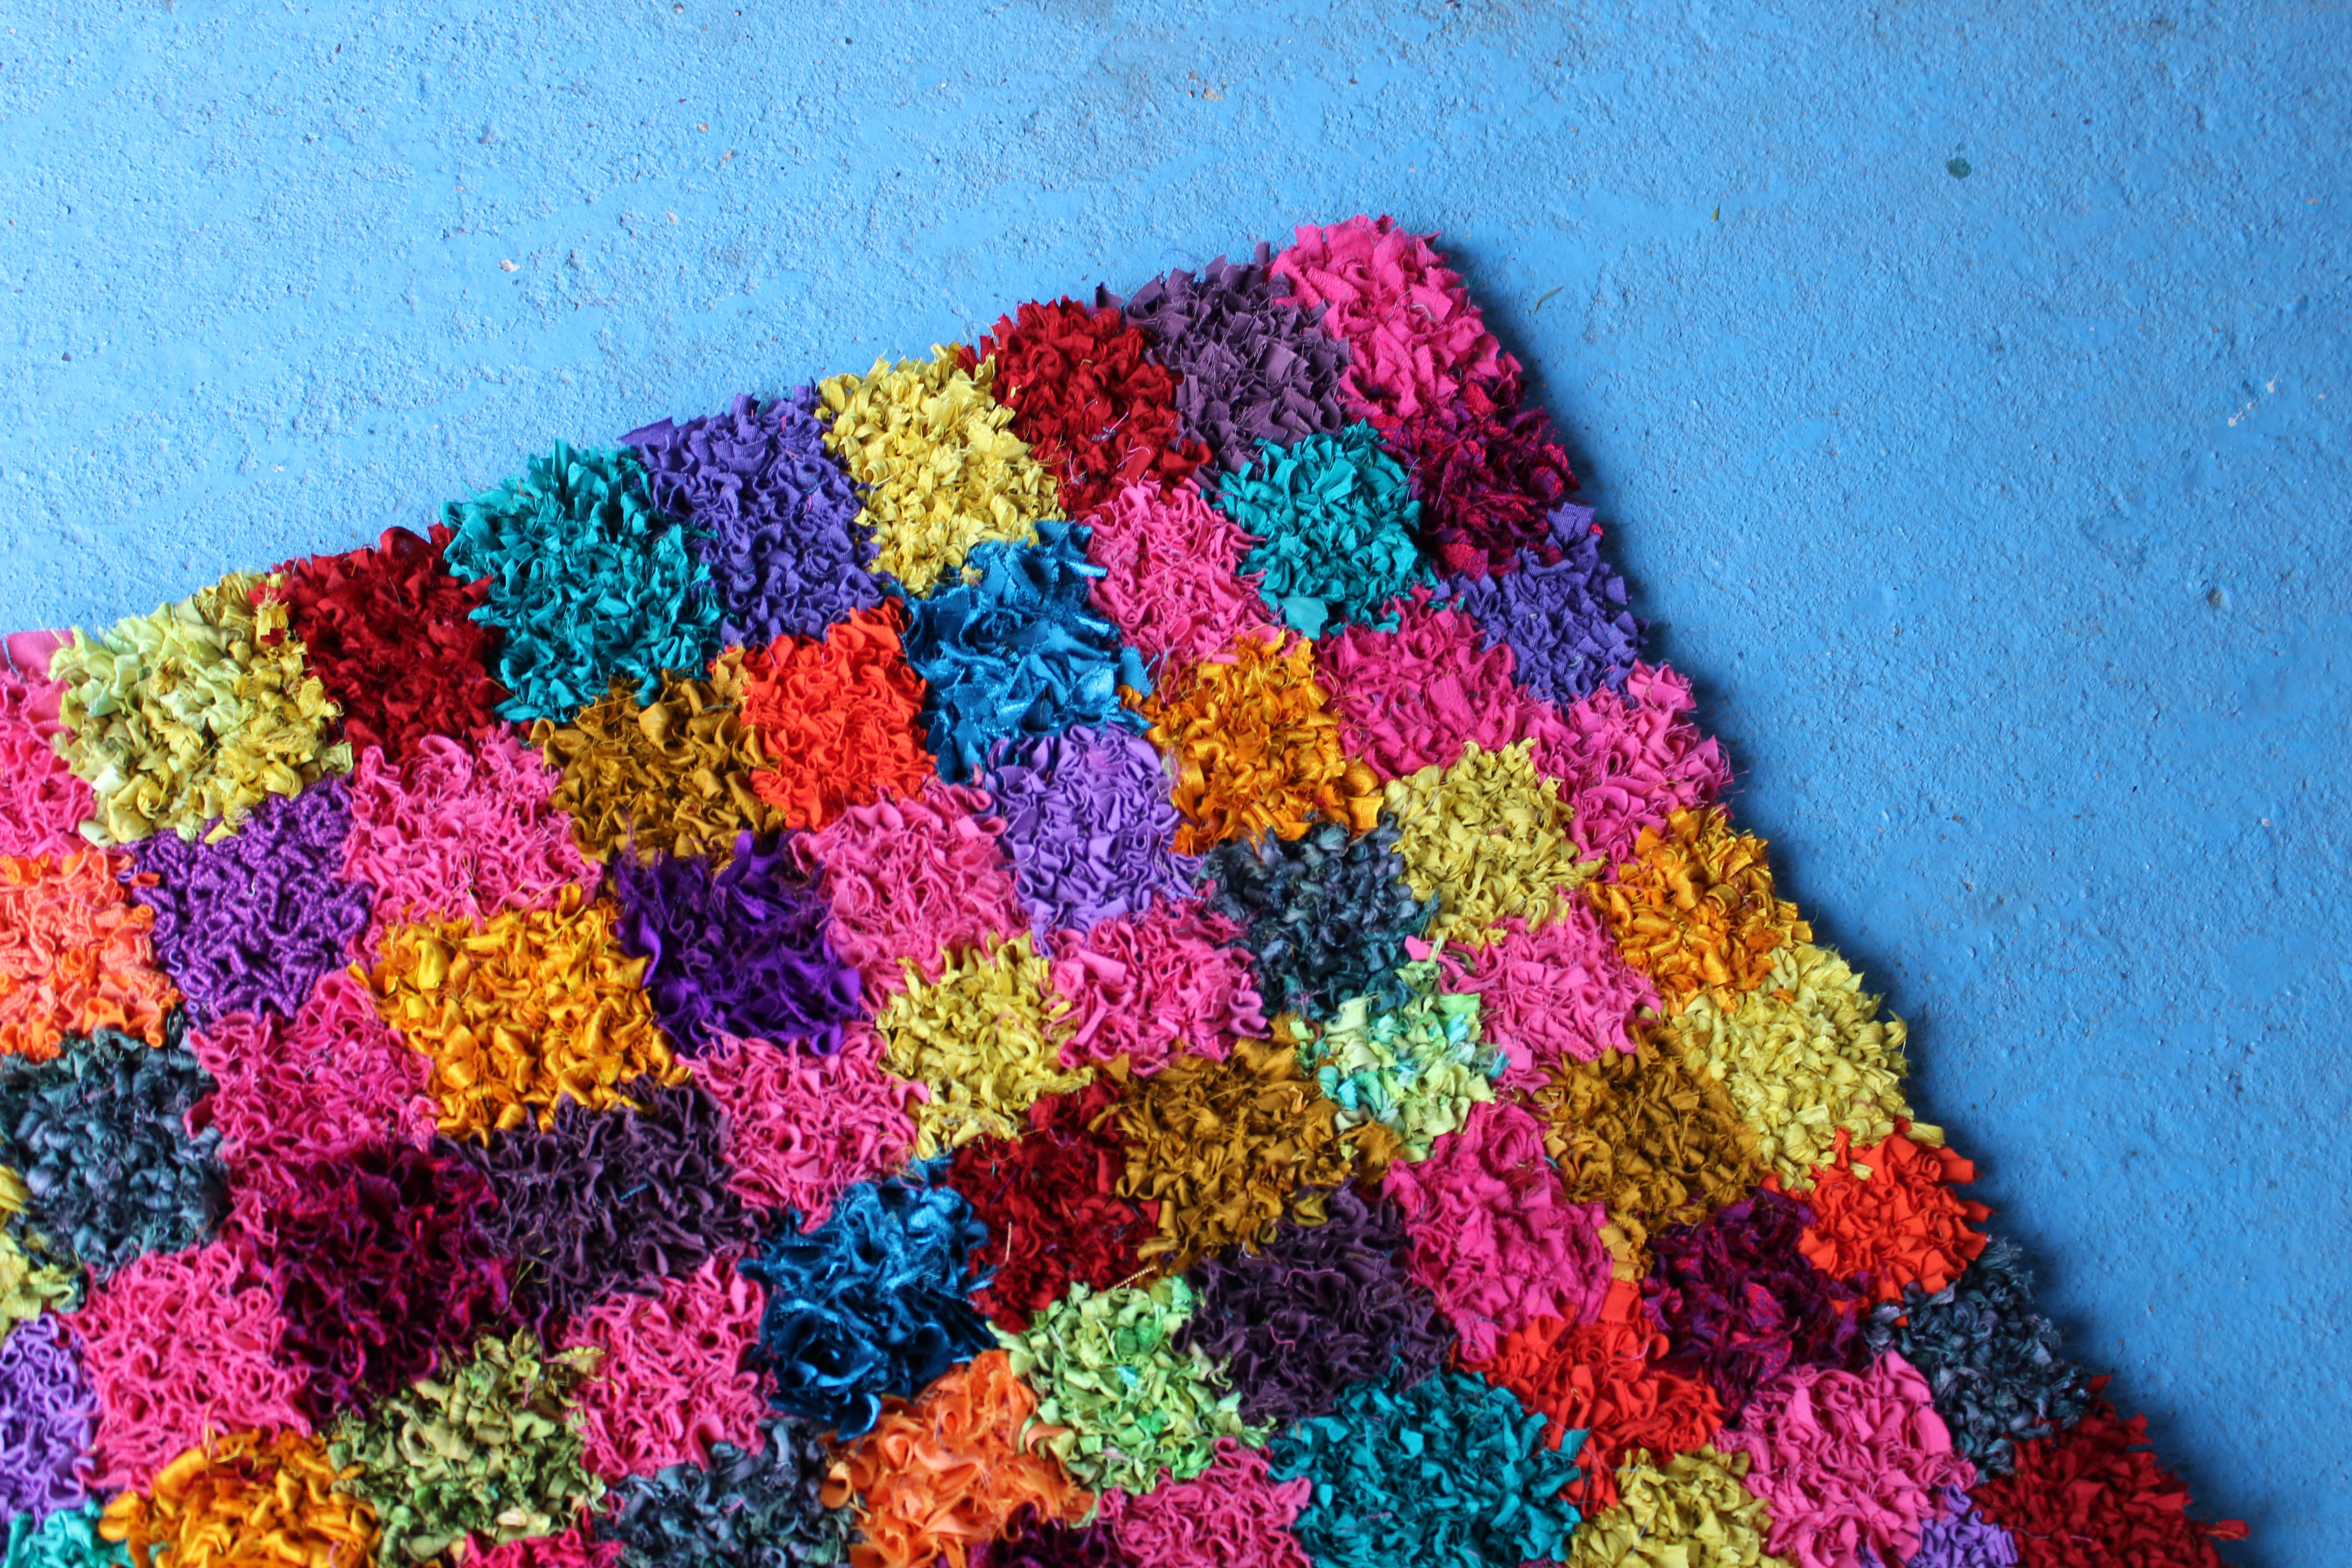 Beautiful handmade rag rug - great idea for reducing textile waste